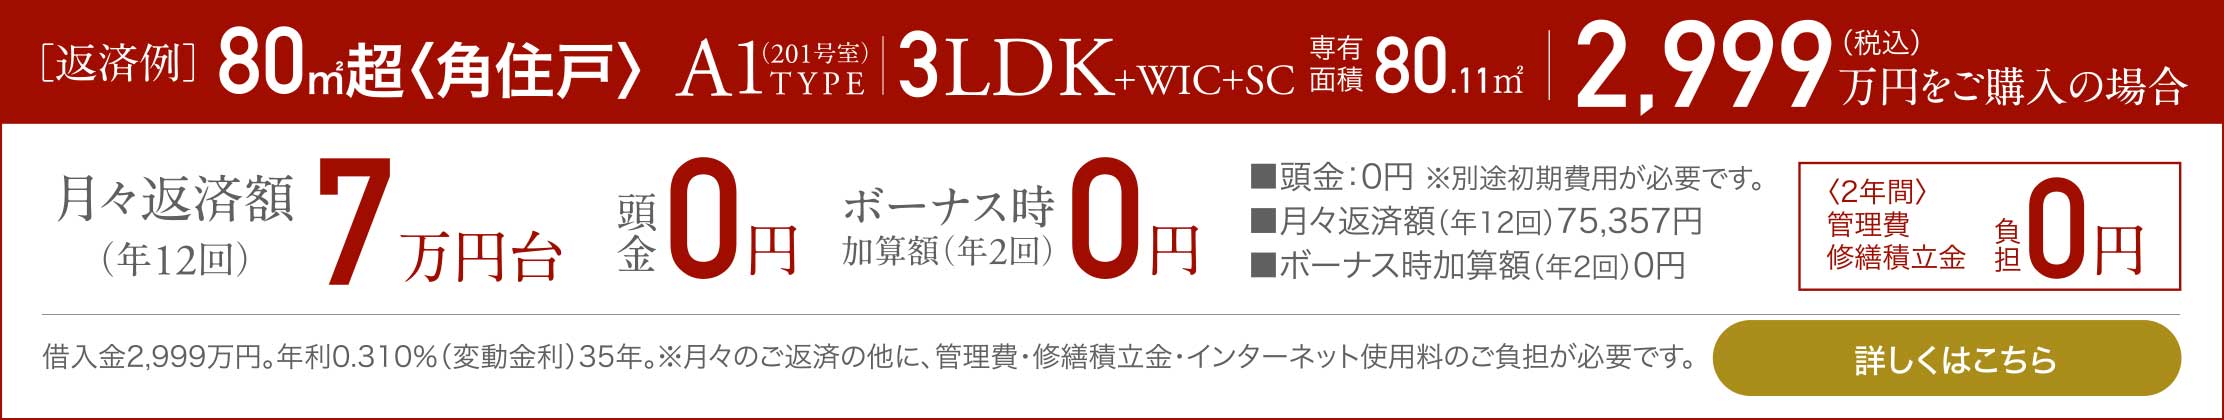 A1TYPE 3LDK+WIC+SC 80.11㎡ ［販売価格］2,999万円（税込）をご購入の場合